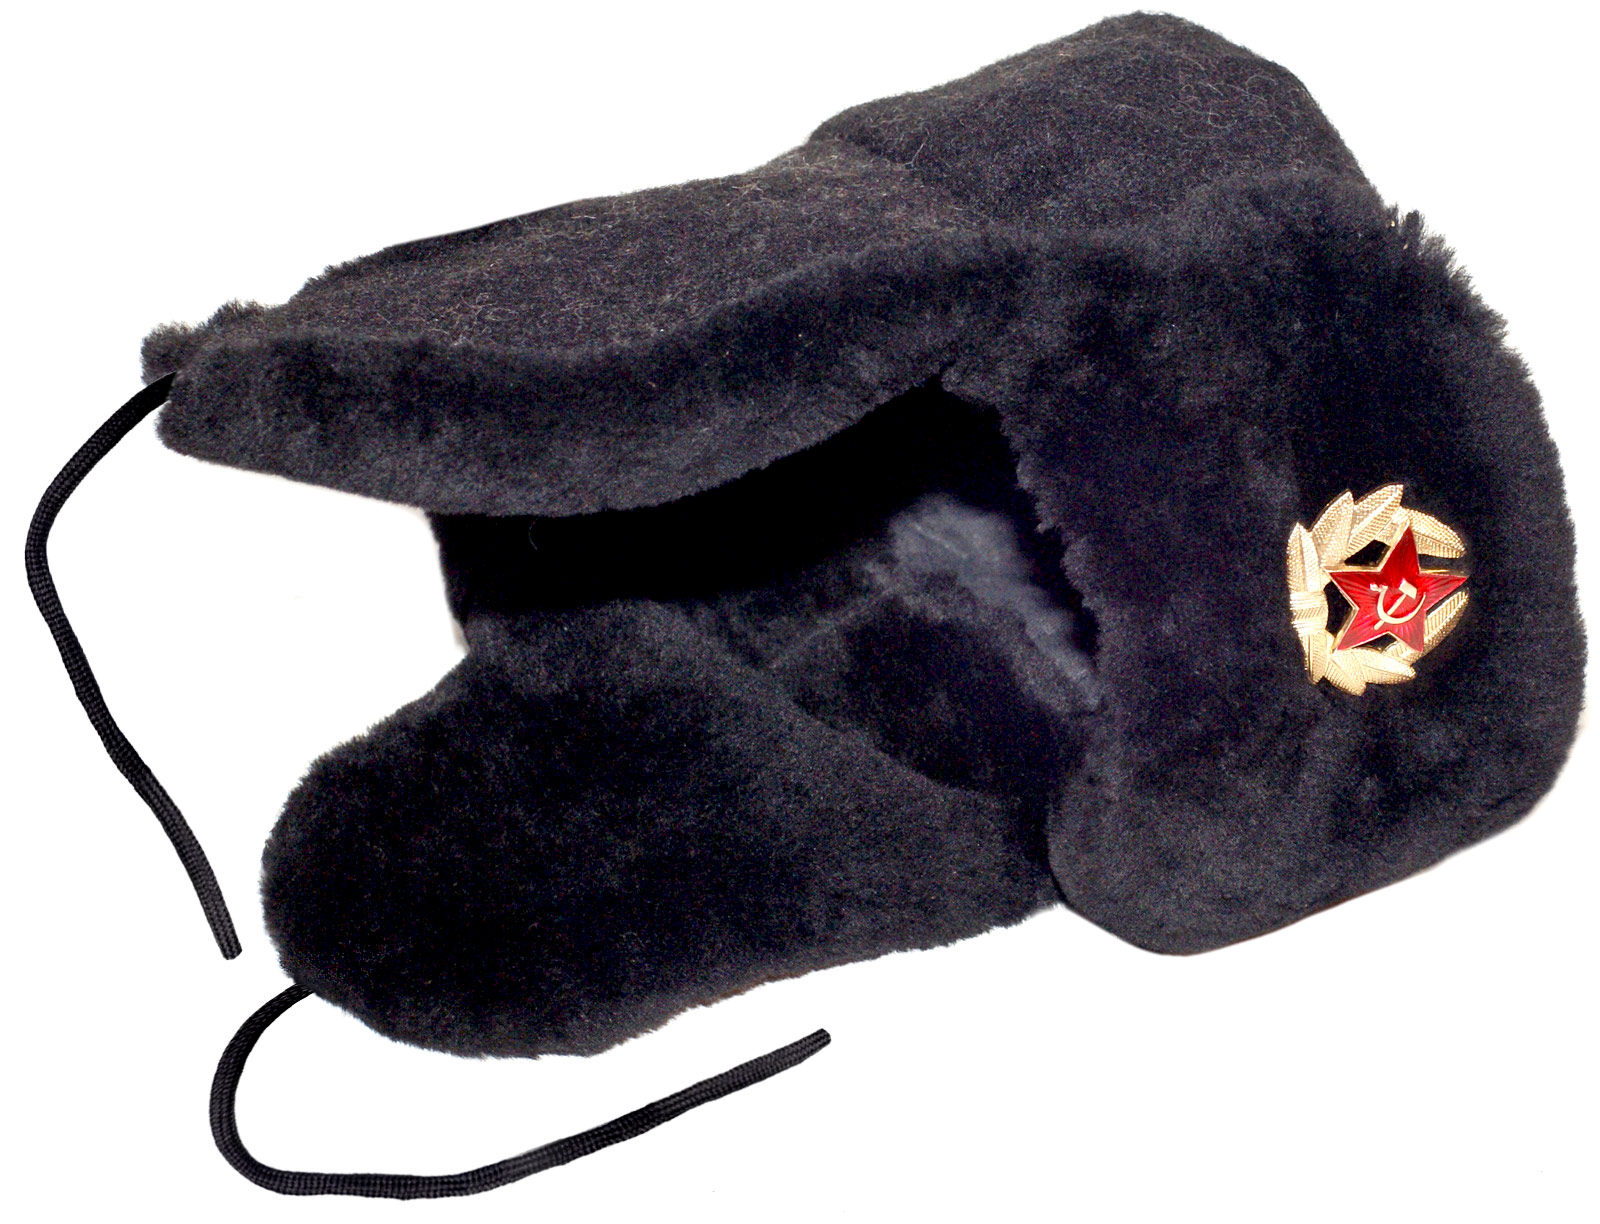 http://www.ushanka.com/media/products/black-mouton-ushanka-hat.jpg